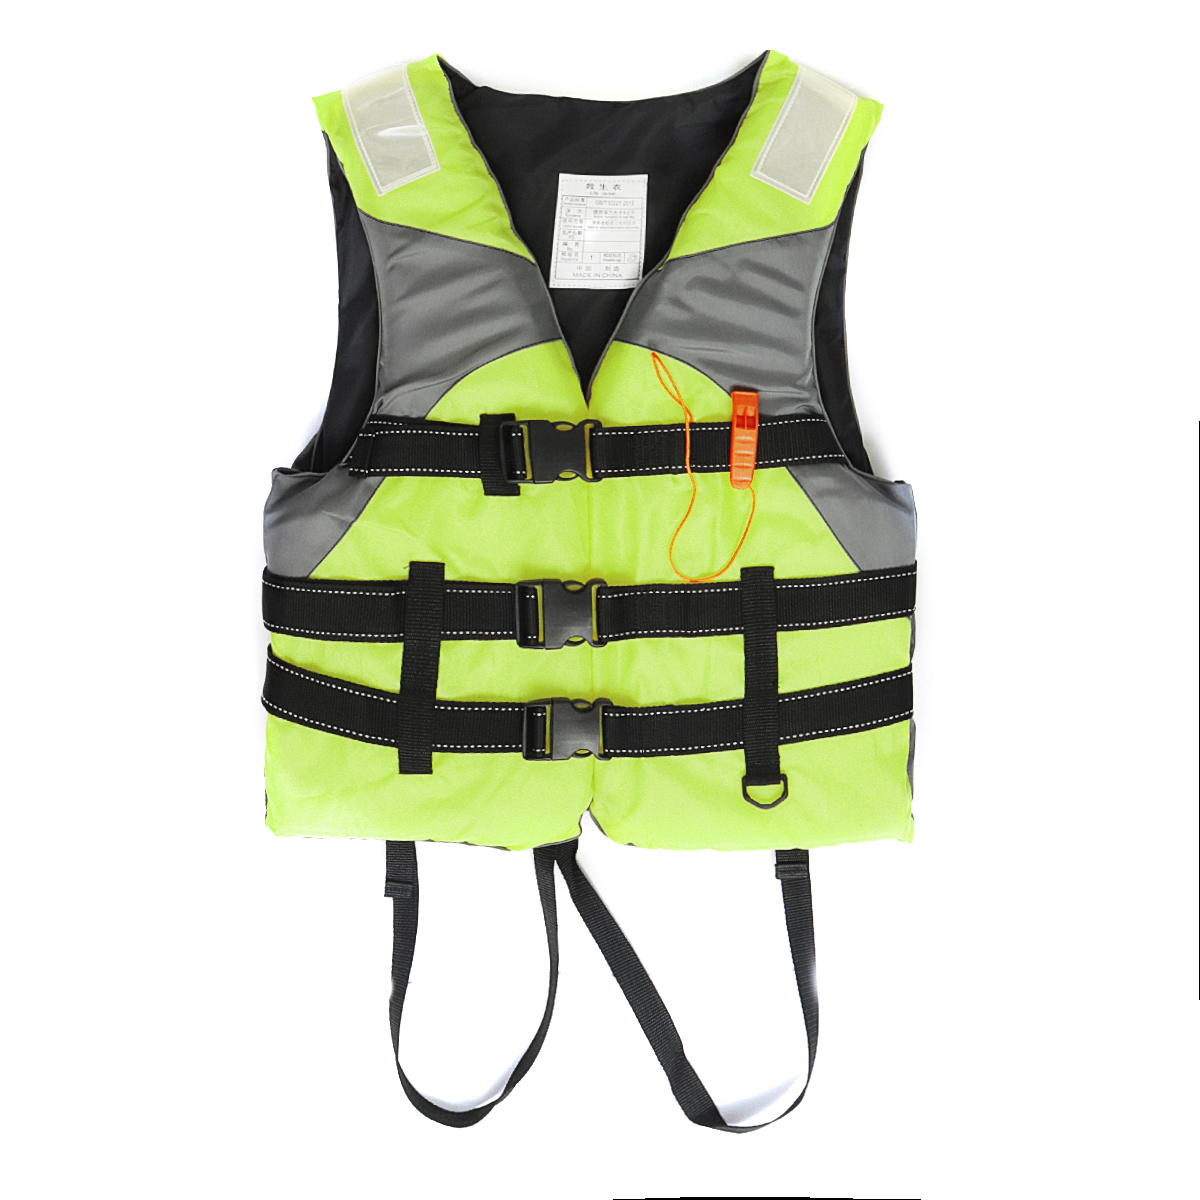 Reflective-Adult-Life-Jacket-Vest-Professional-Fully-Enclosed-Water-Sports-Safty-Aid-Swimwear-Fishin-1640049-9